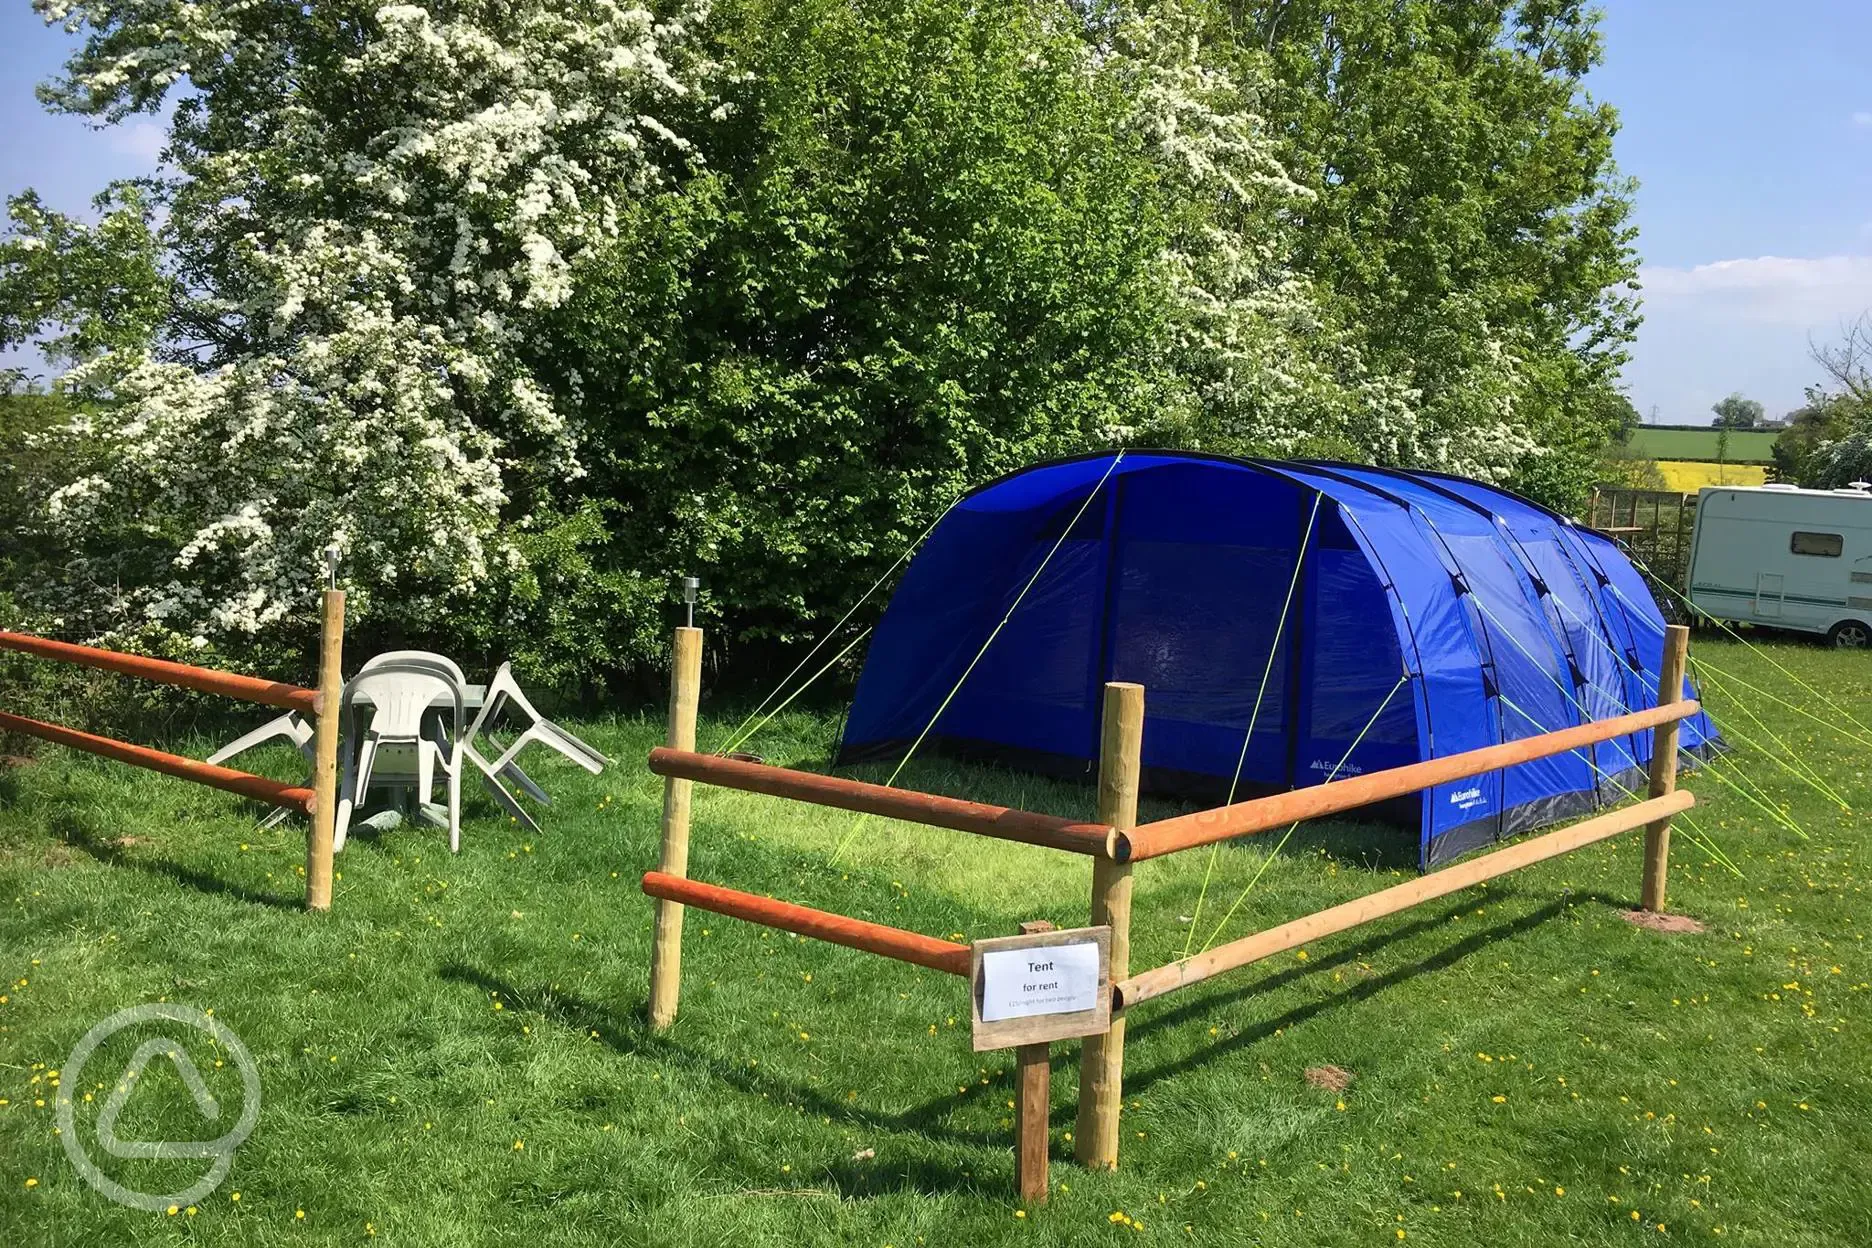 Ready tent